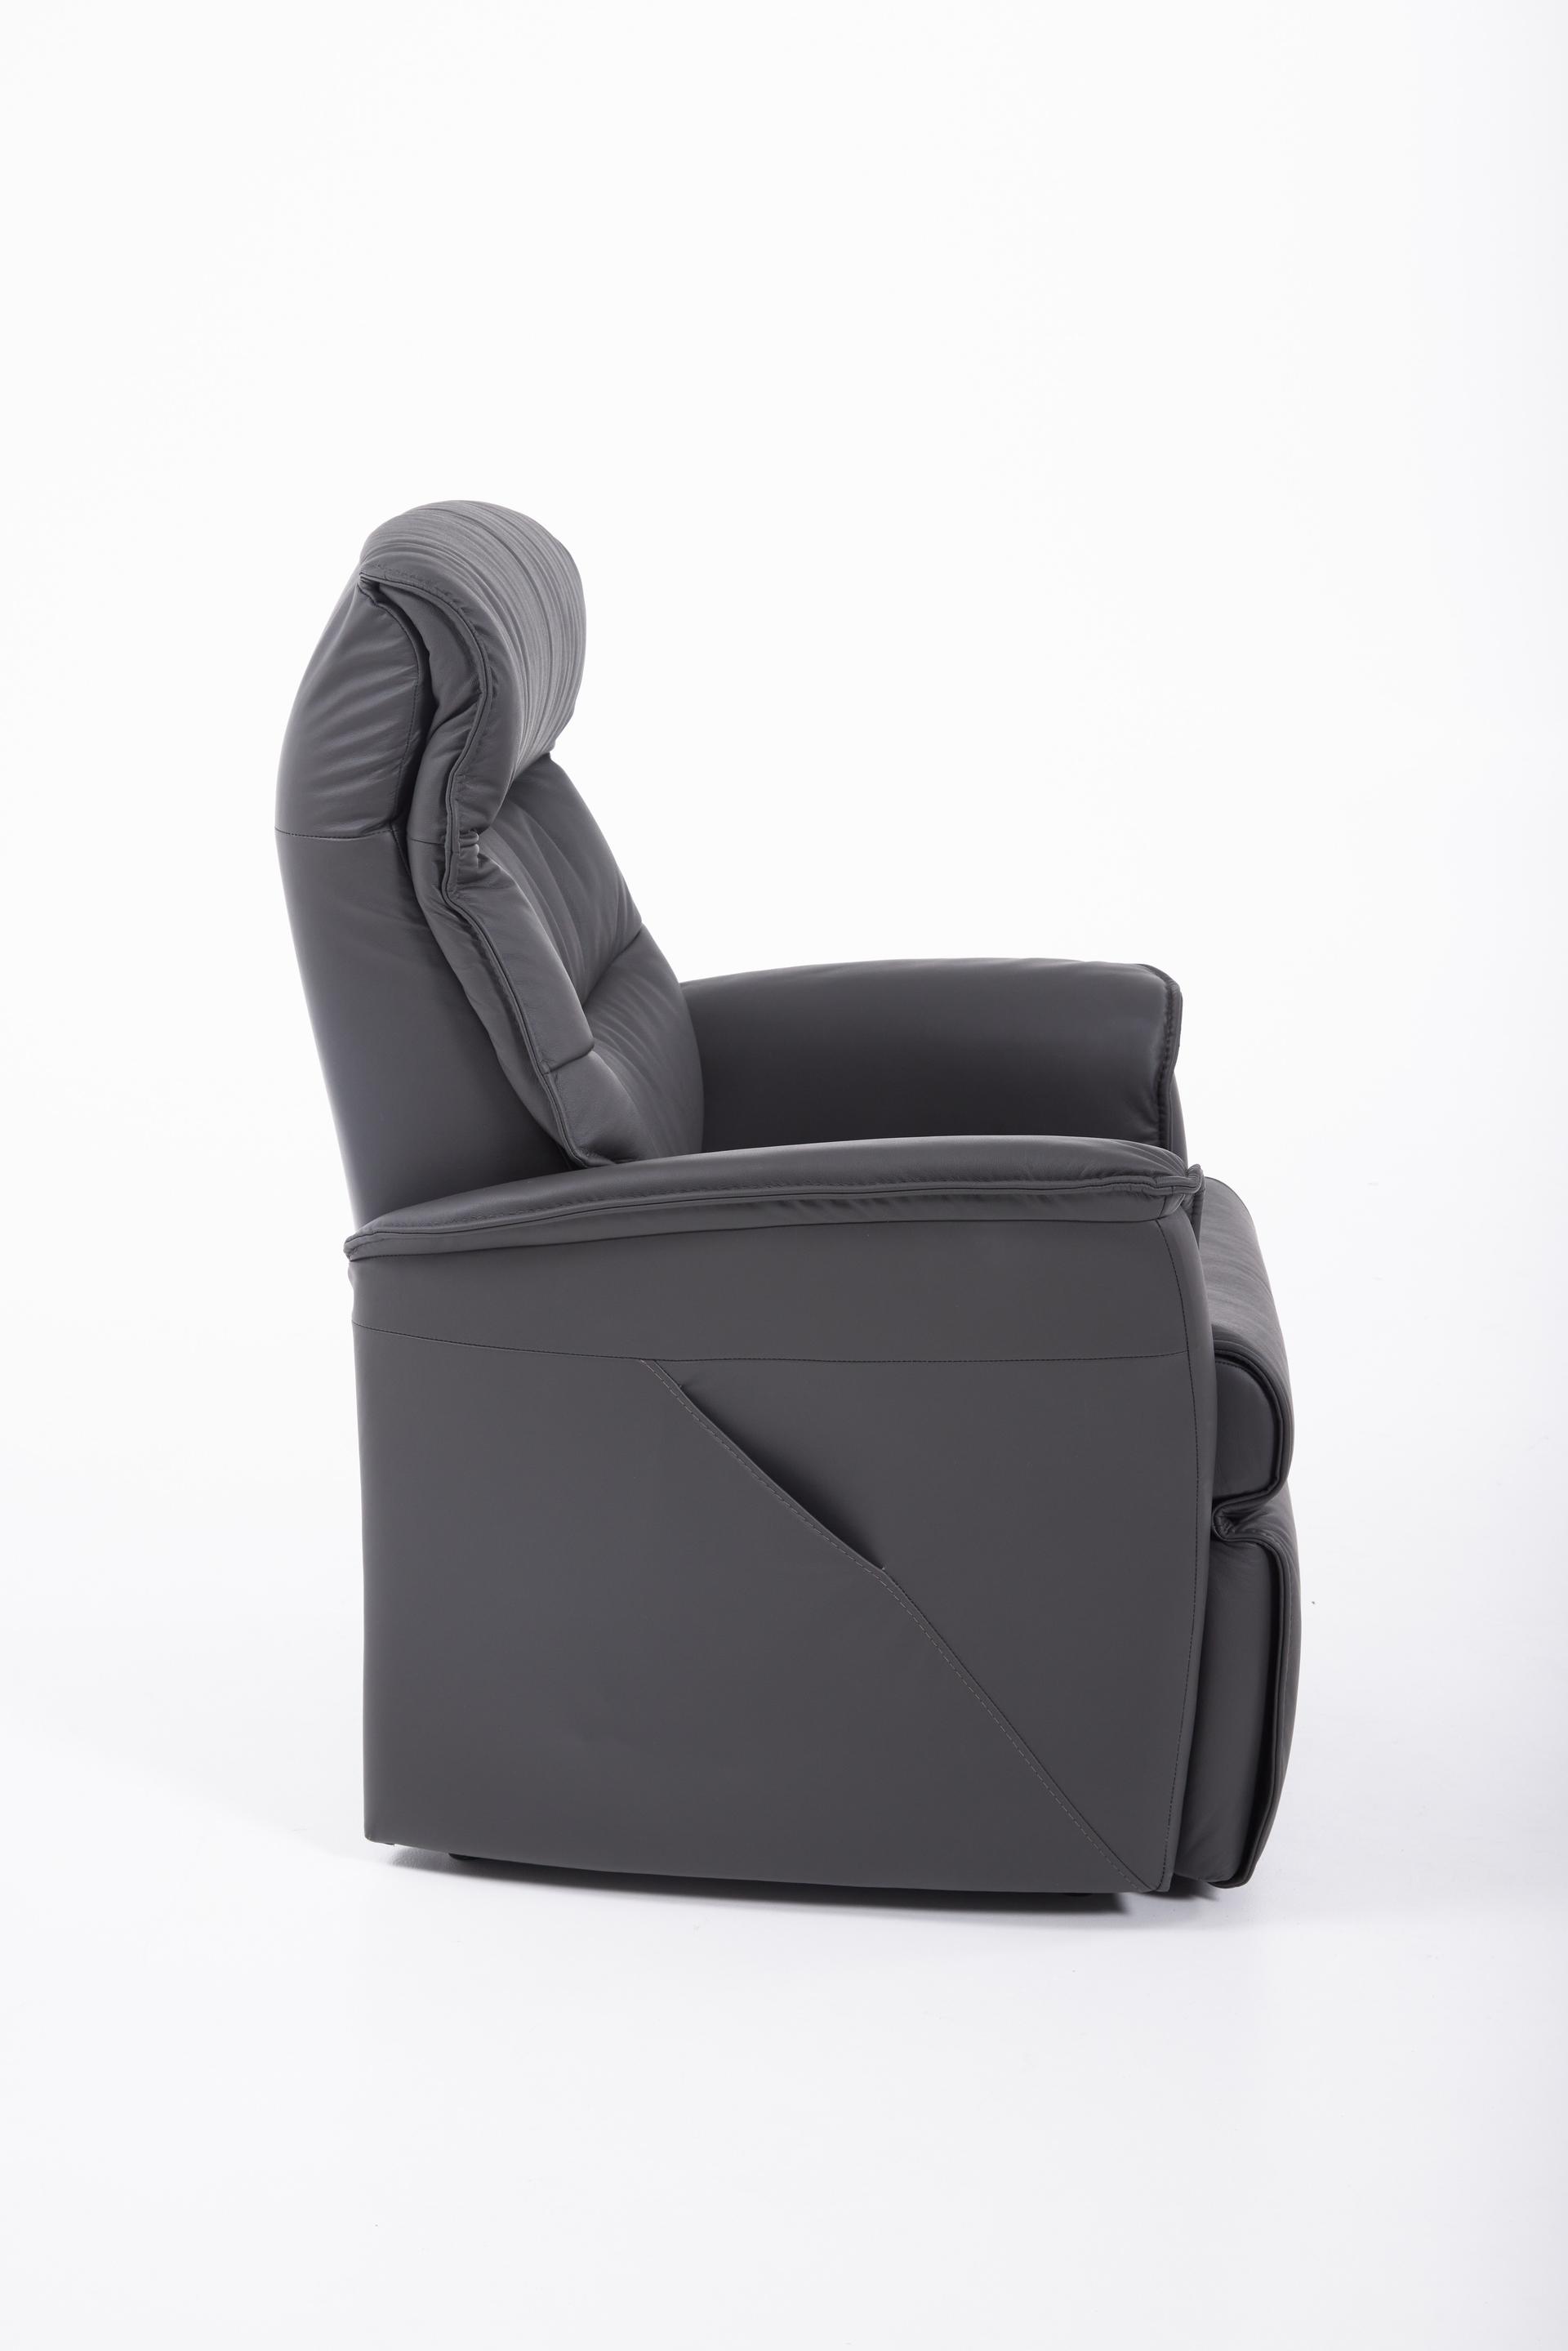 Ekornes Nordic Spirit Paramount Rise and Recline Chair Graphite